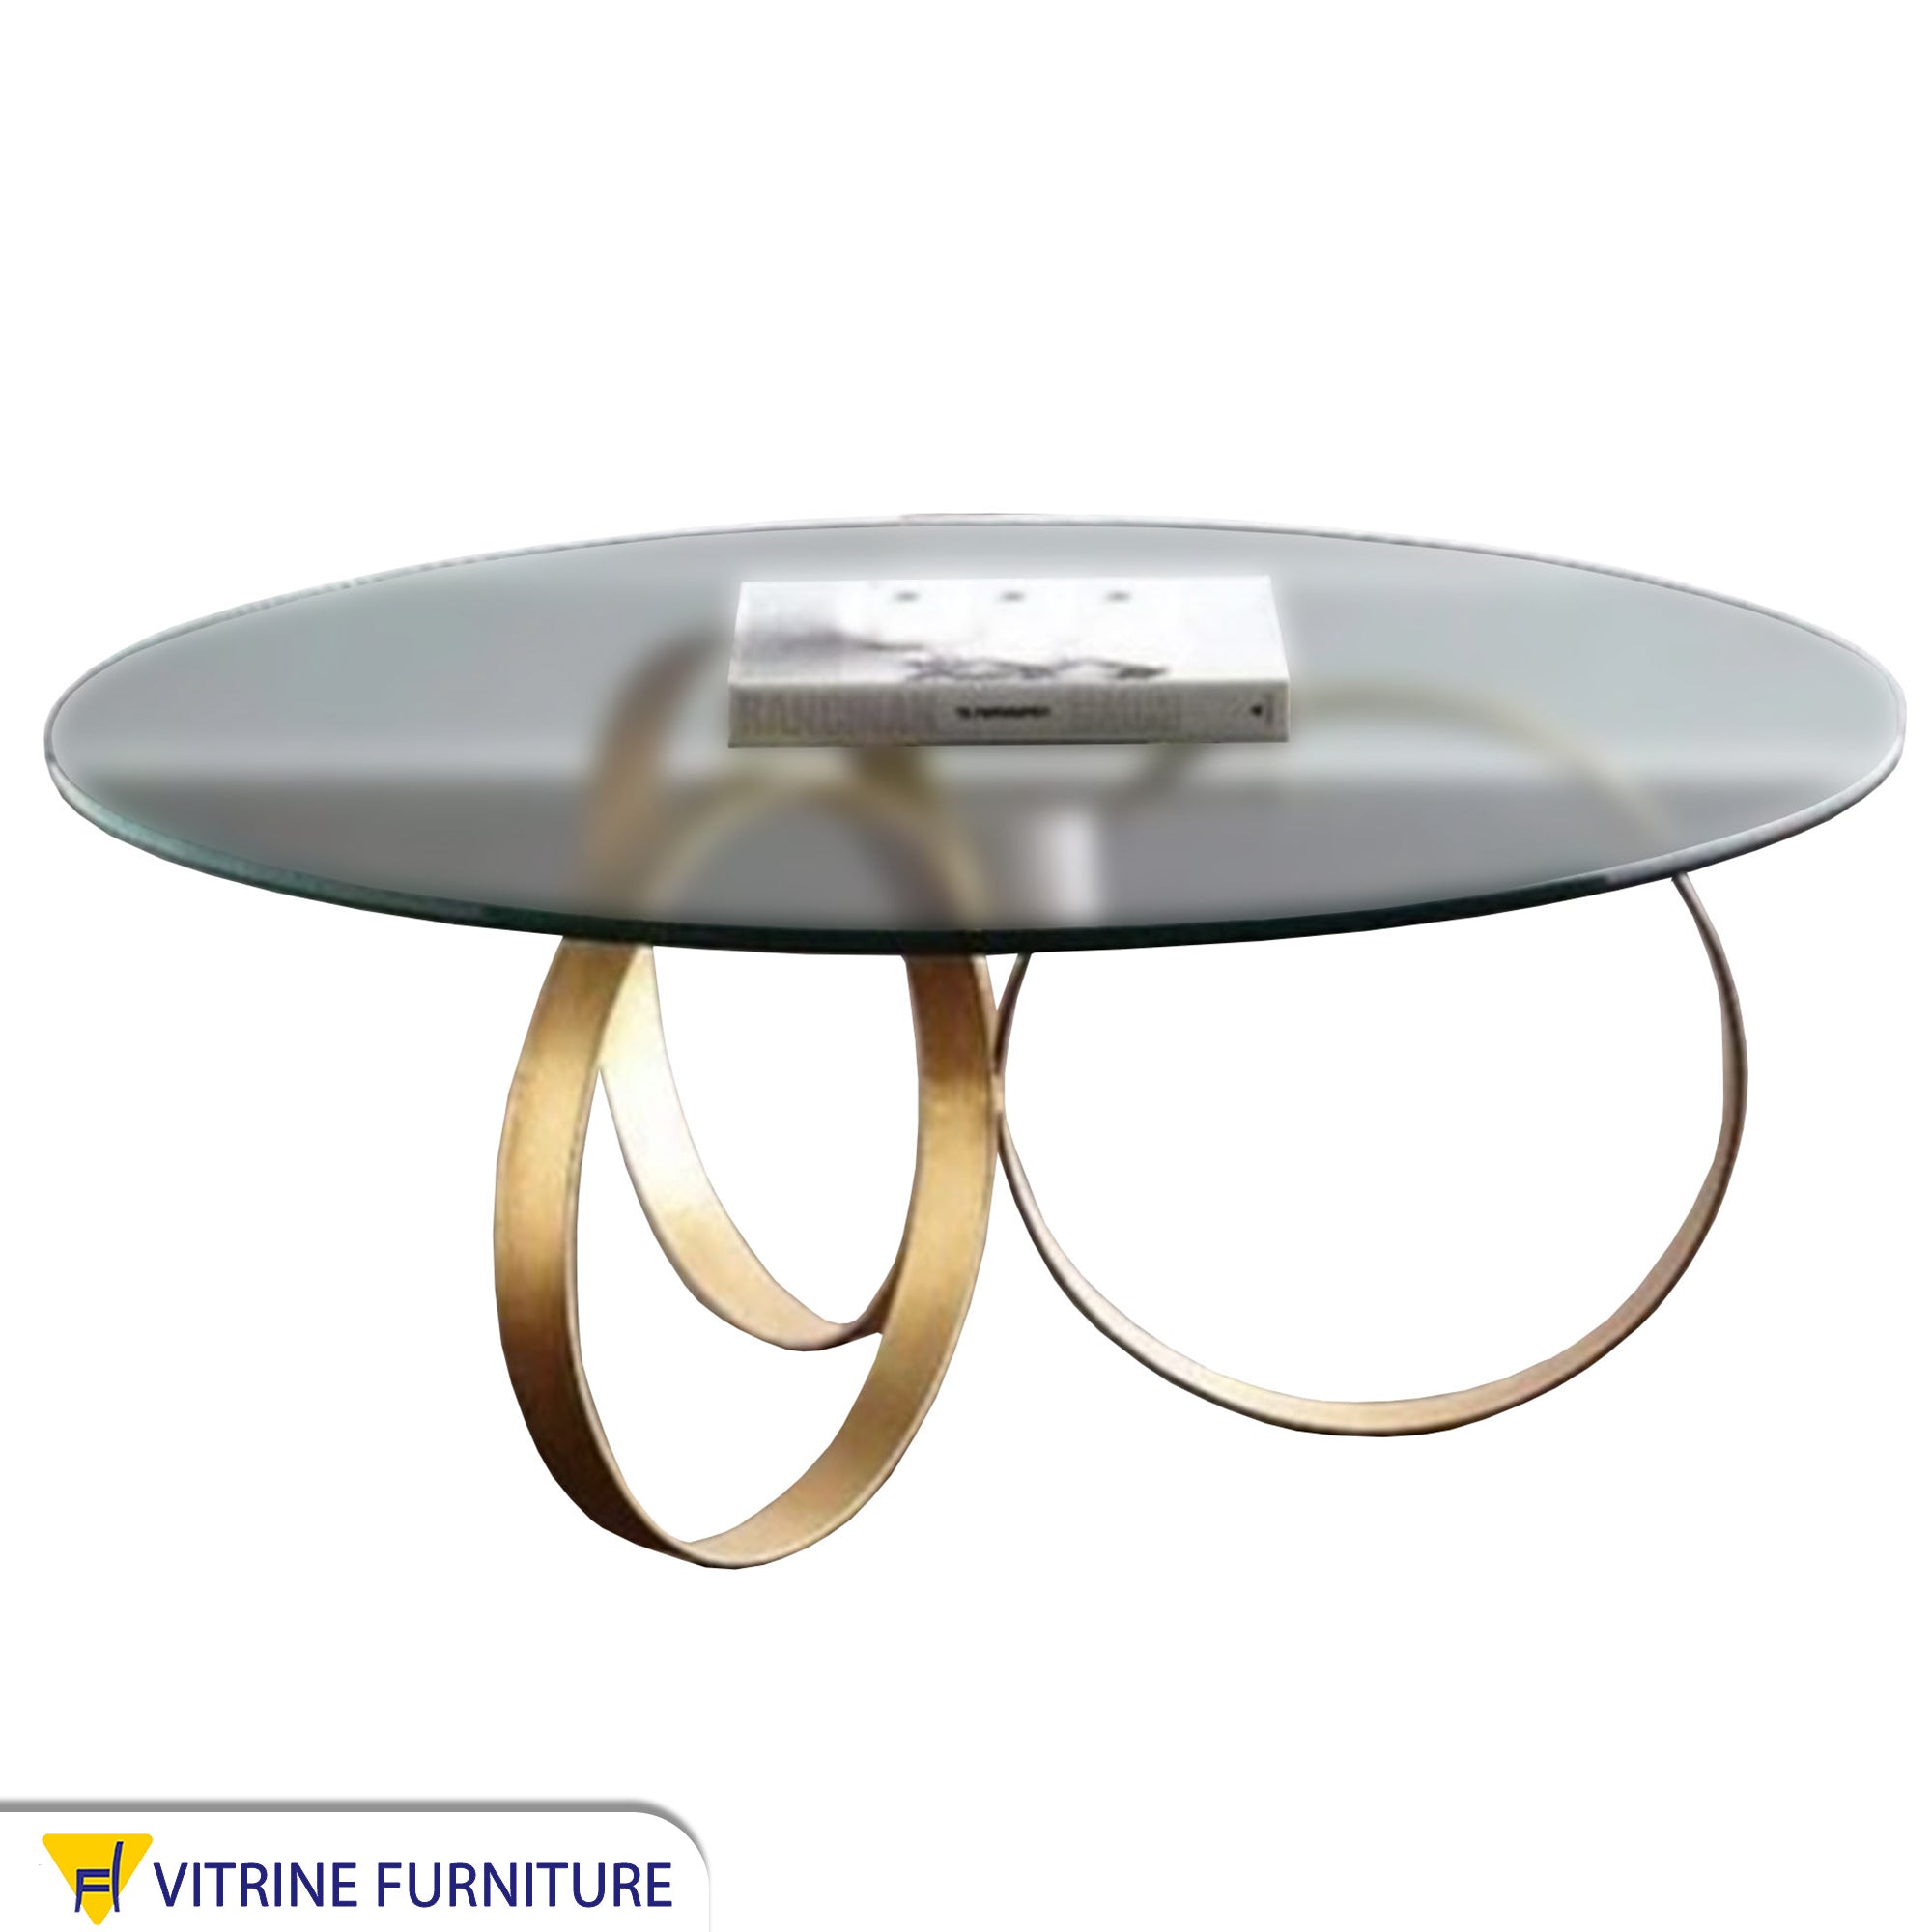 Circular coffee table with a modern design